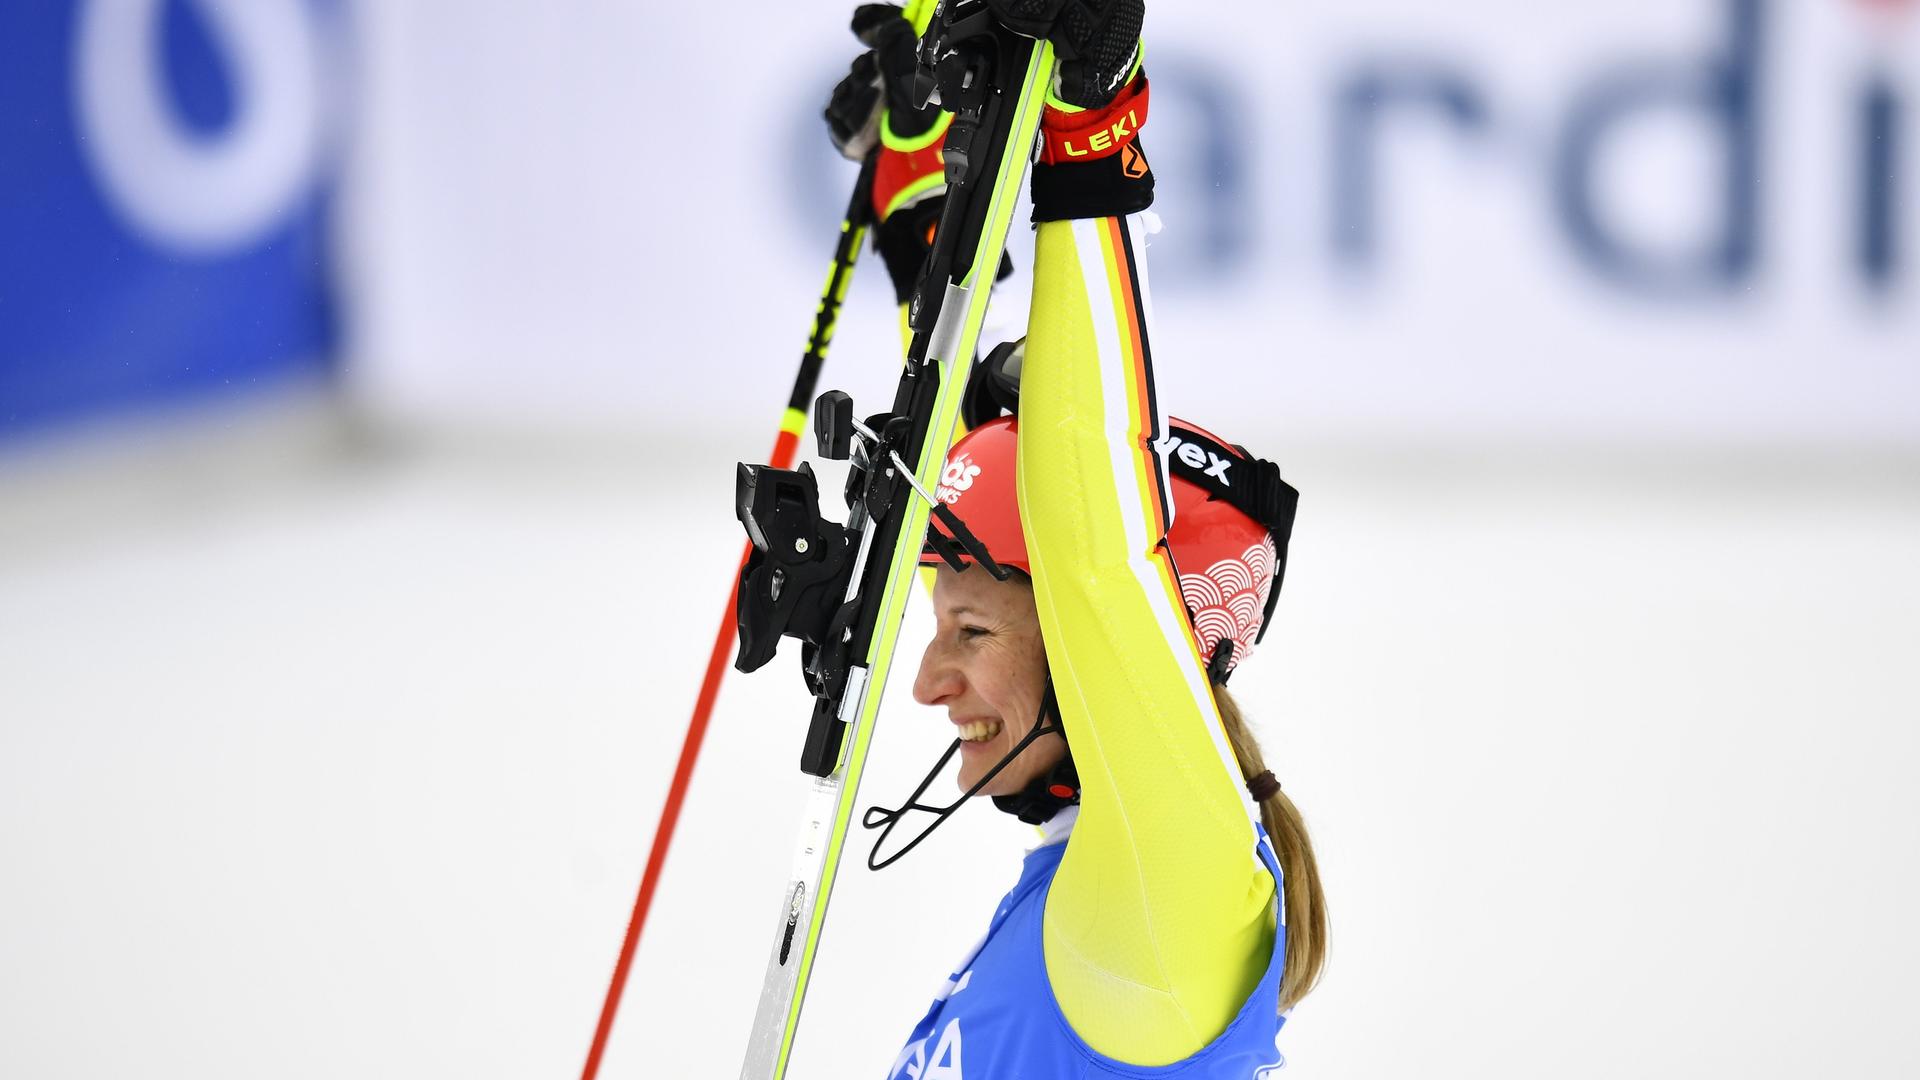 Slalom-Weltcup - Lena Dürr gewinnt ersten Slalom-Weltcup